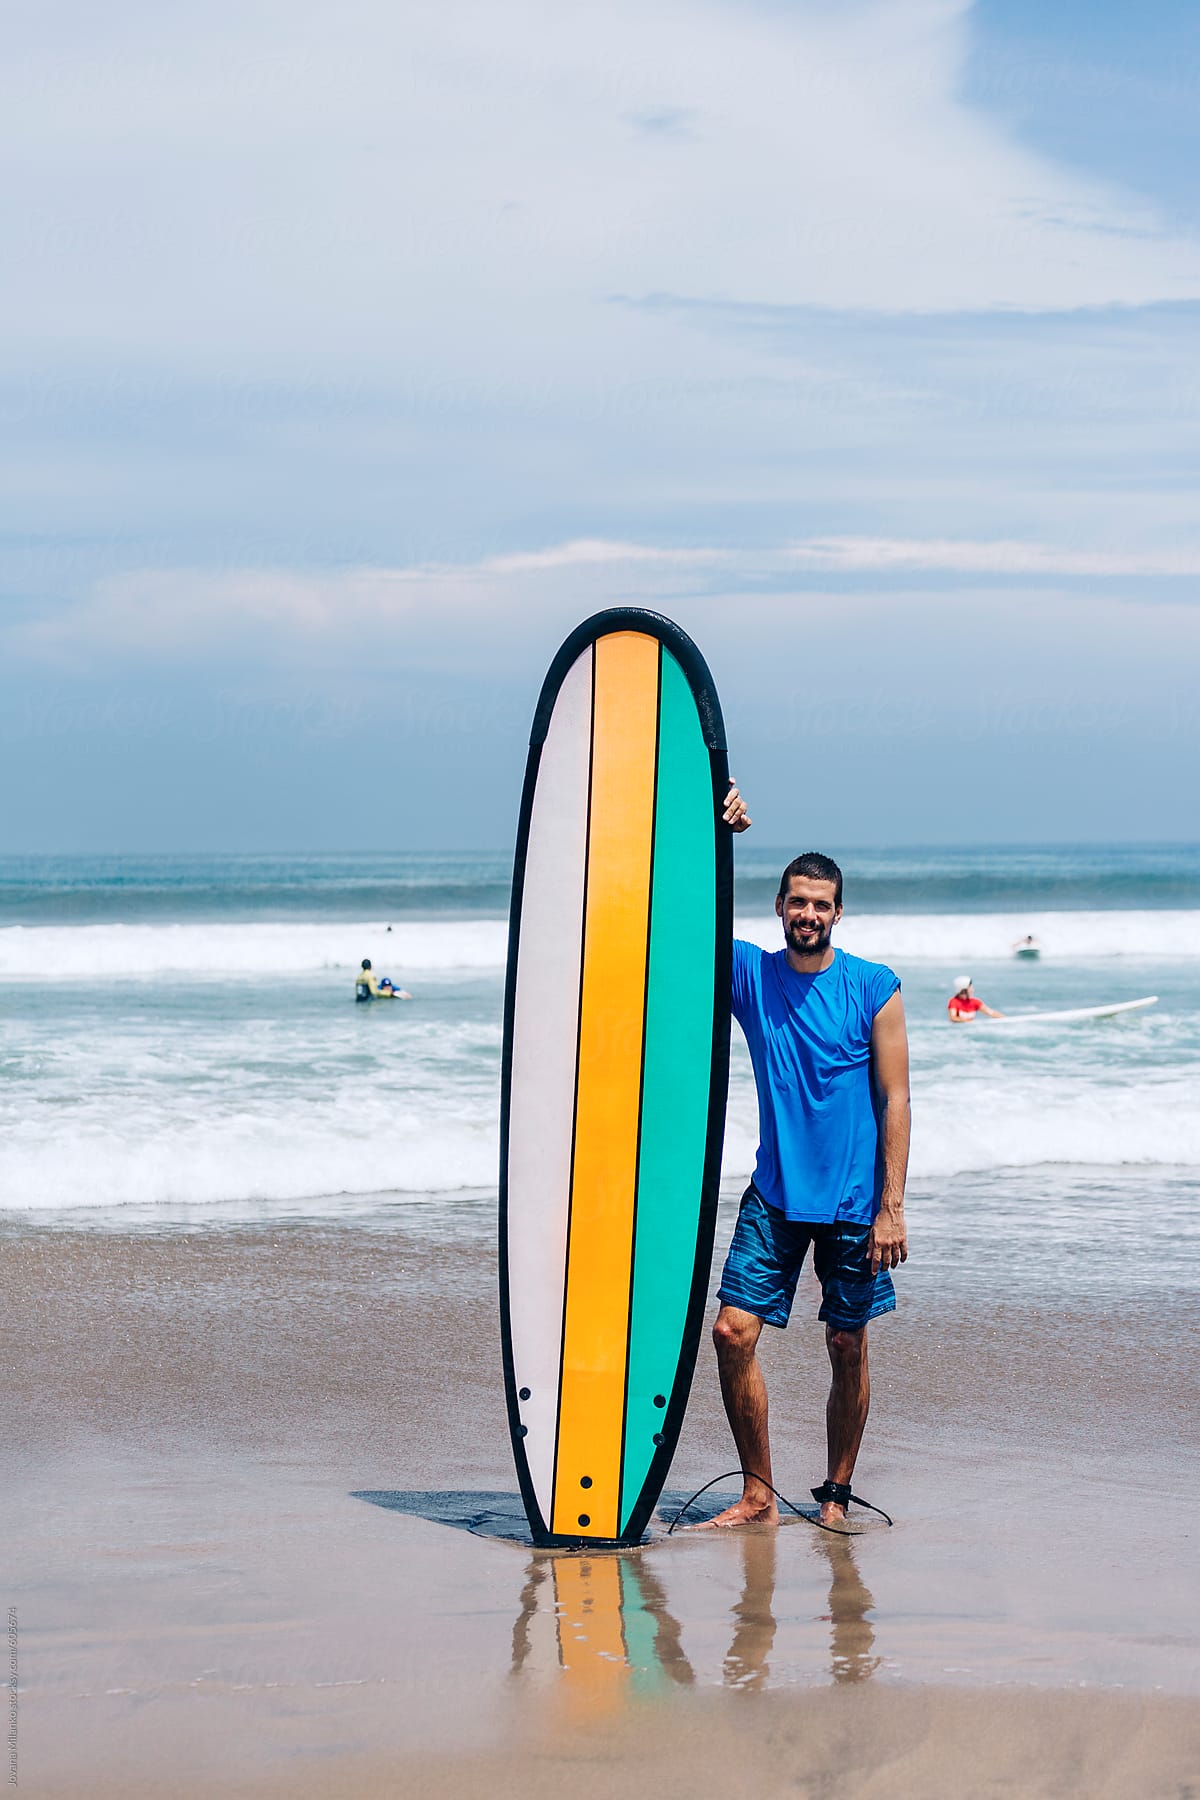 At marmelade Blot Man Holding Longboard At The Surfing Beach" by Stocksy Contributor "Jovana  Milanko" - Stocksy